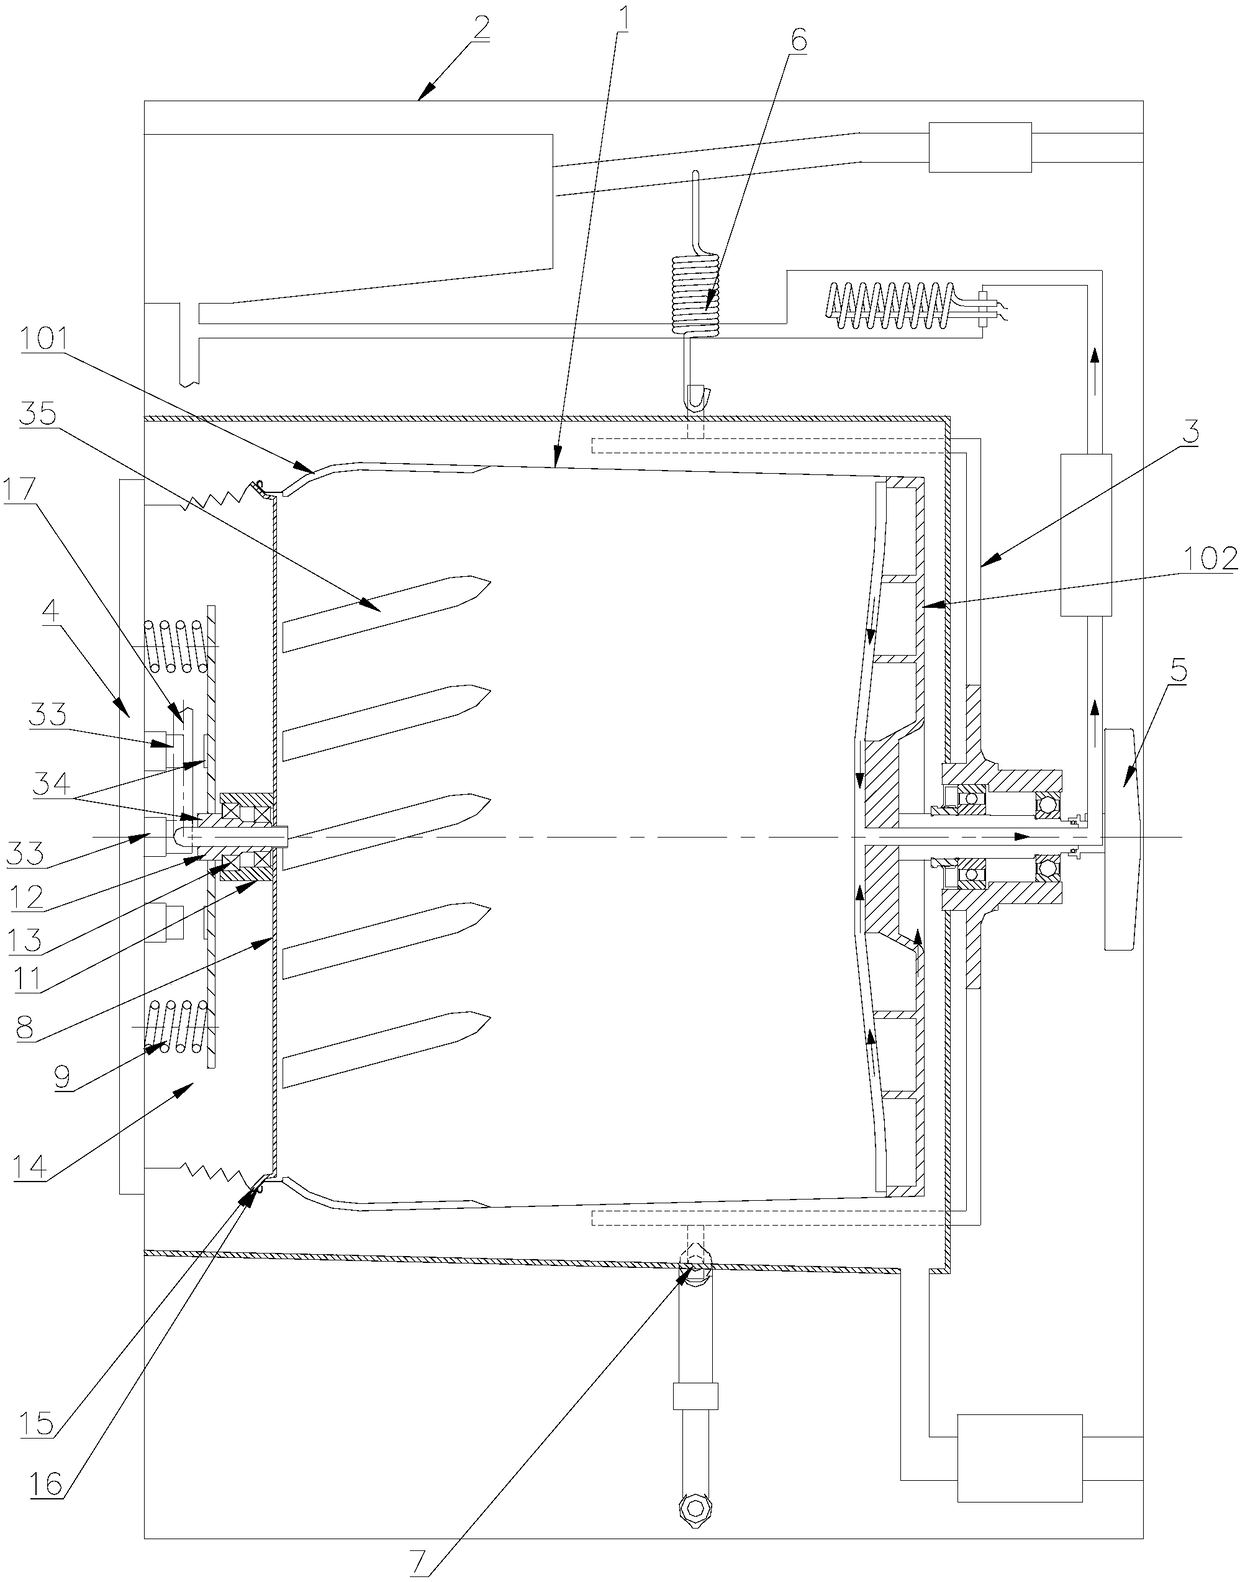 Drainage structure of washing machine